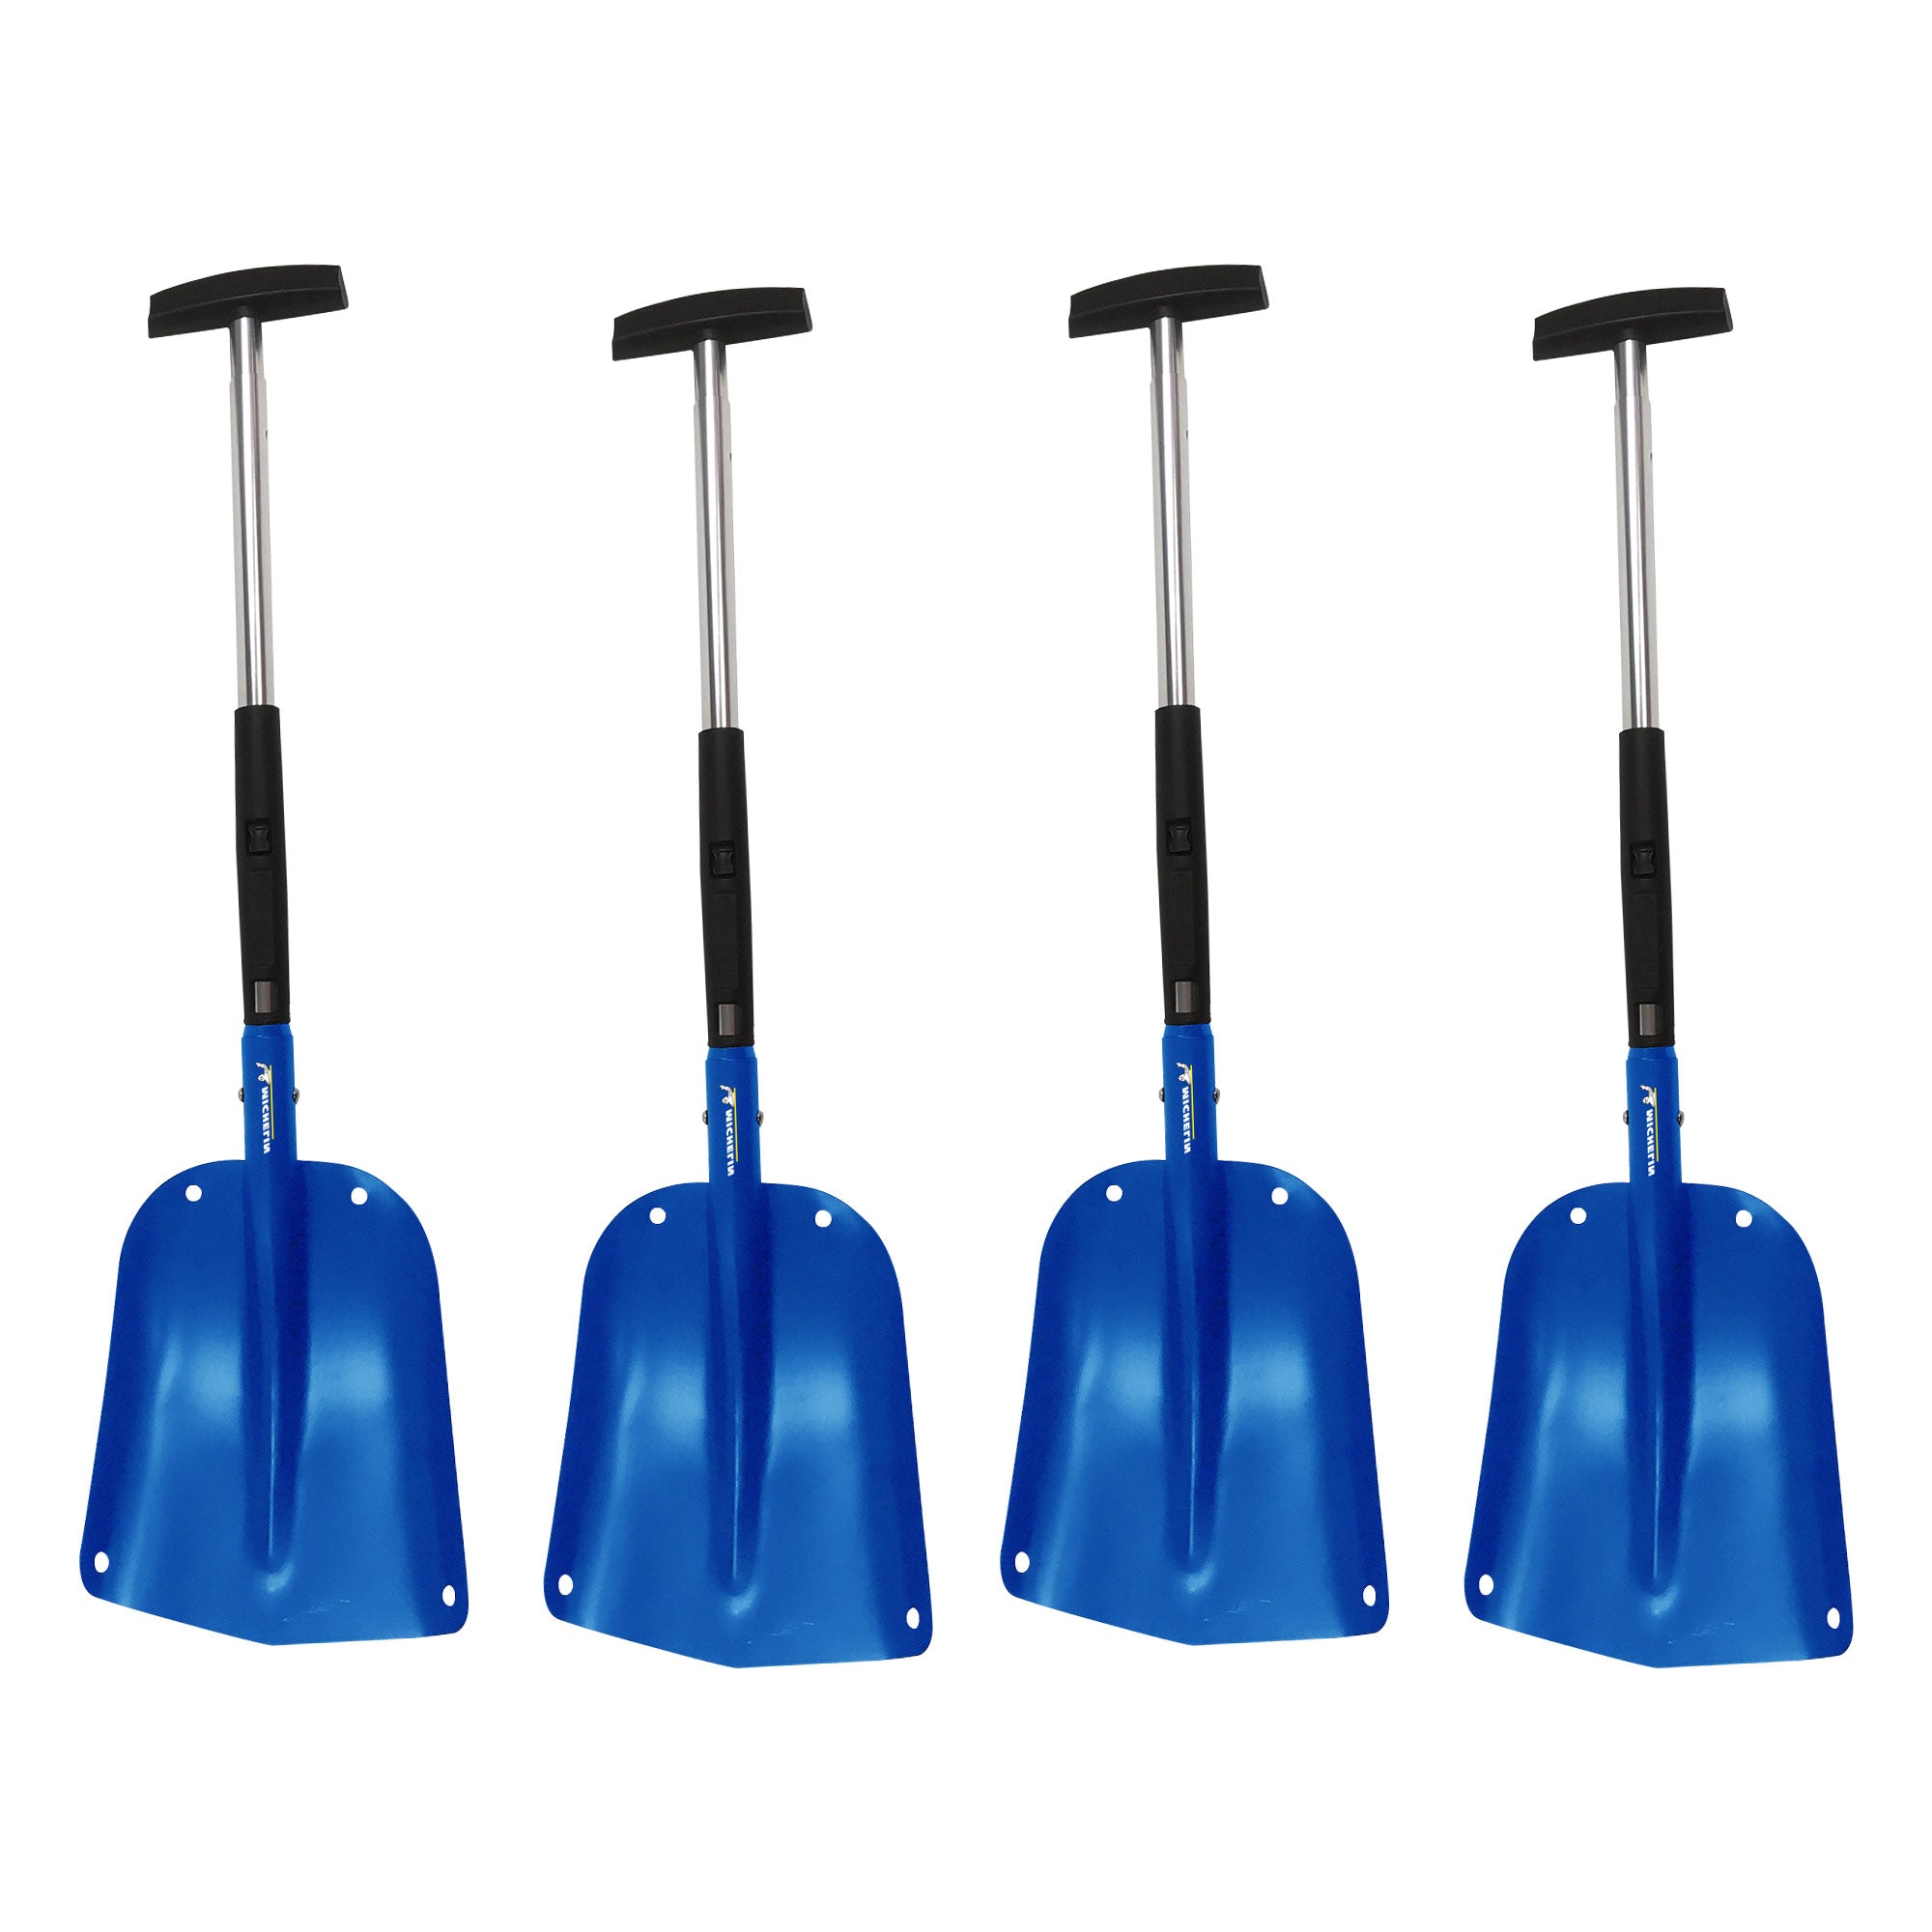 Product shot on white background of four folding utility shovels, fully extended